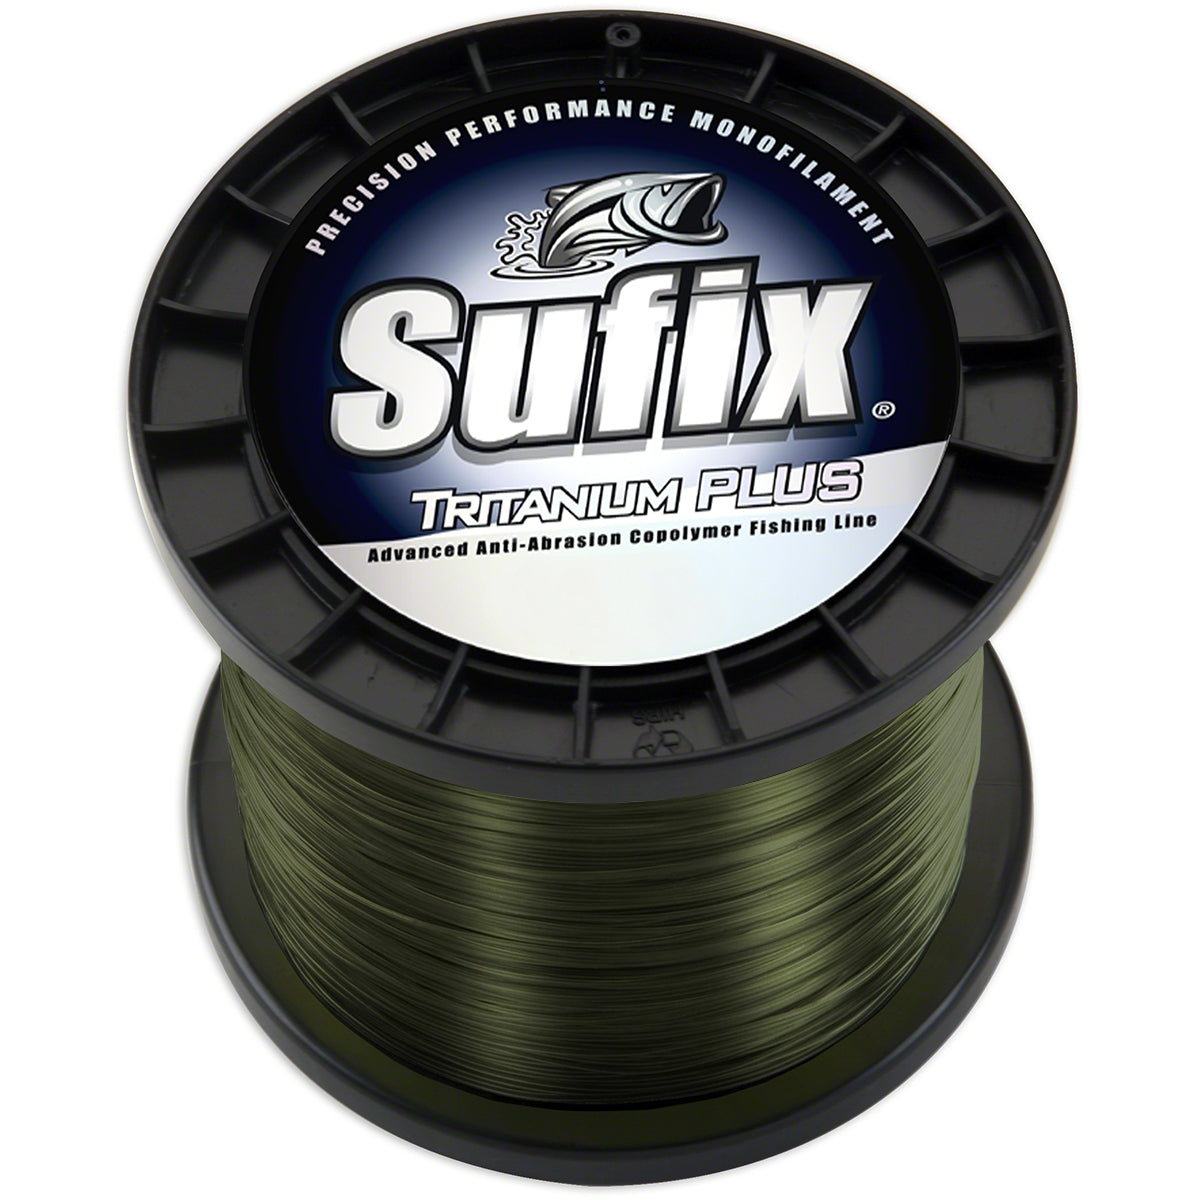 Sufix Tritanium Plus Dark Green Fishing Line (1485 yds) - 40 lb Test Sufix